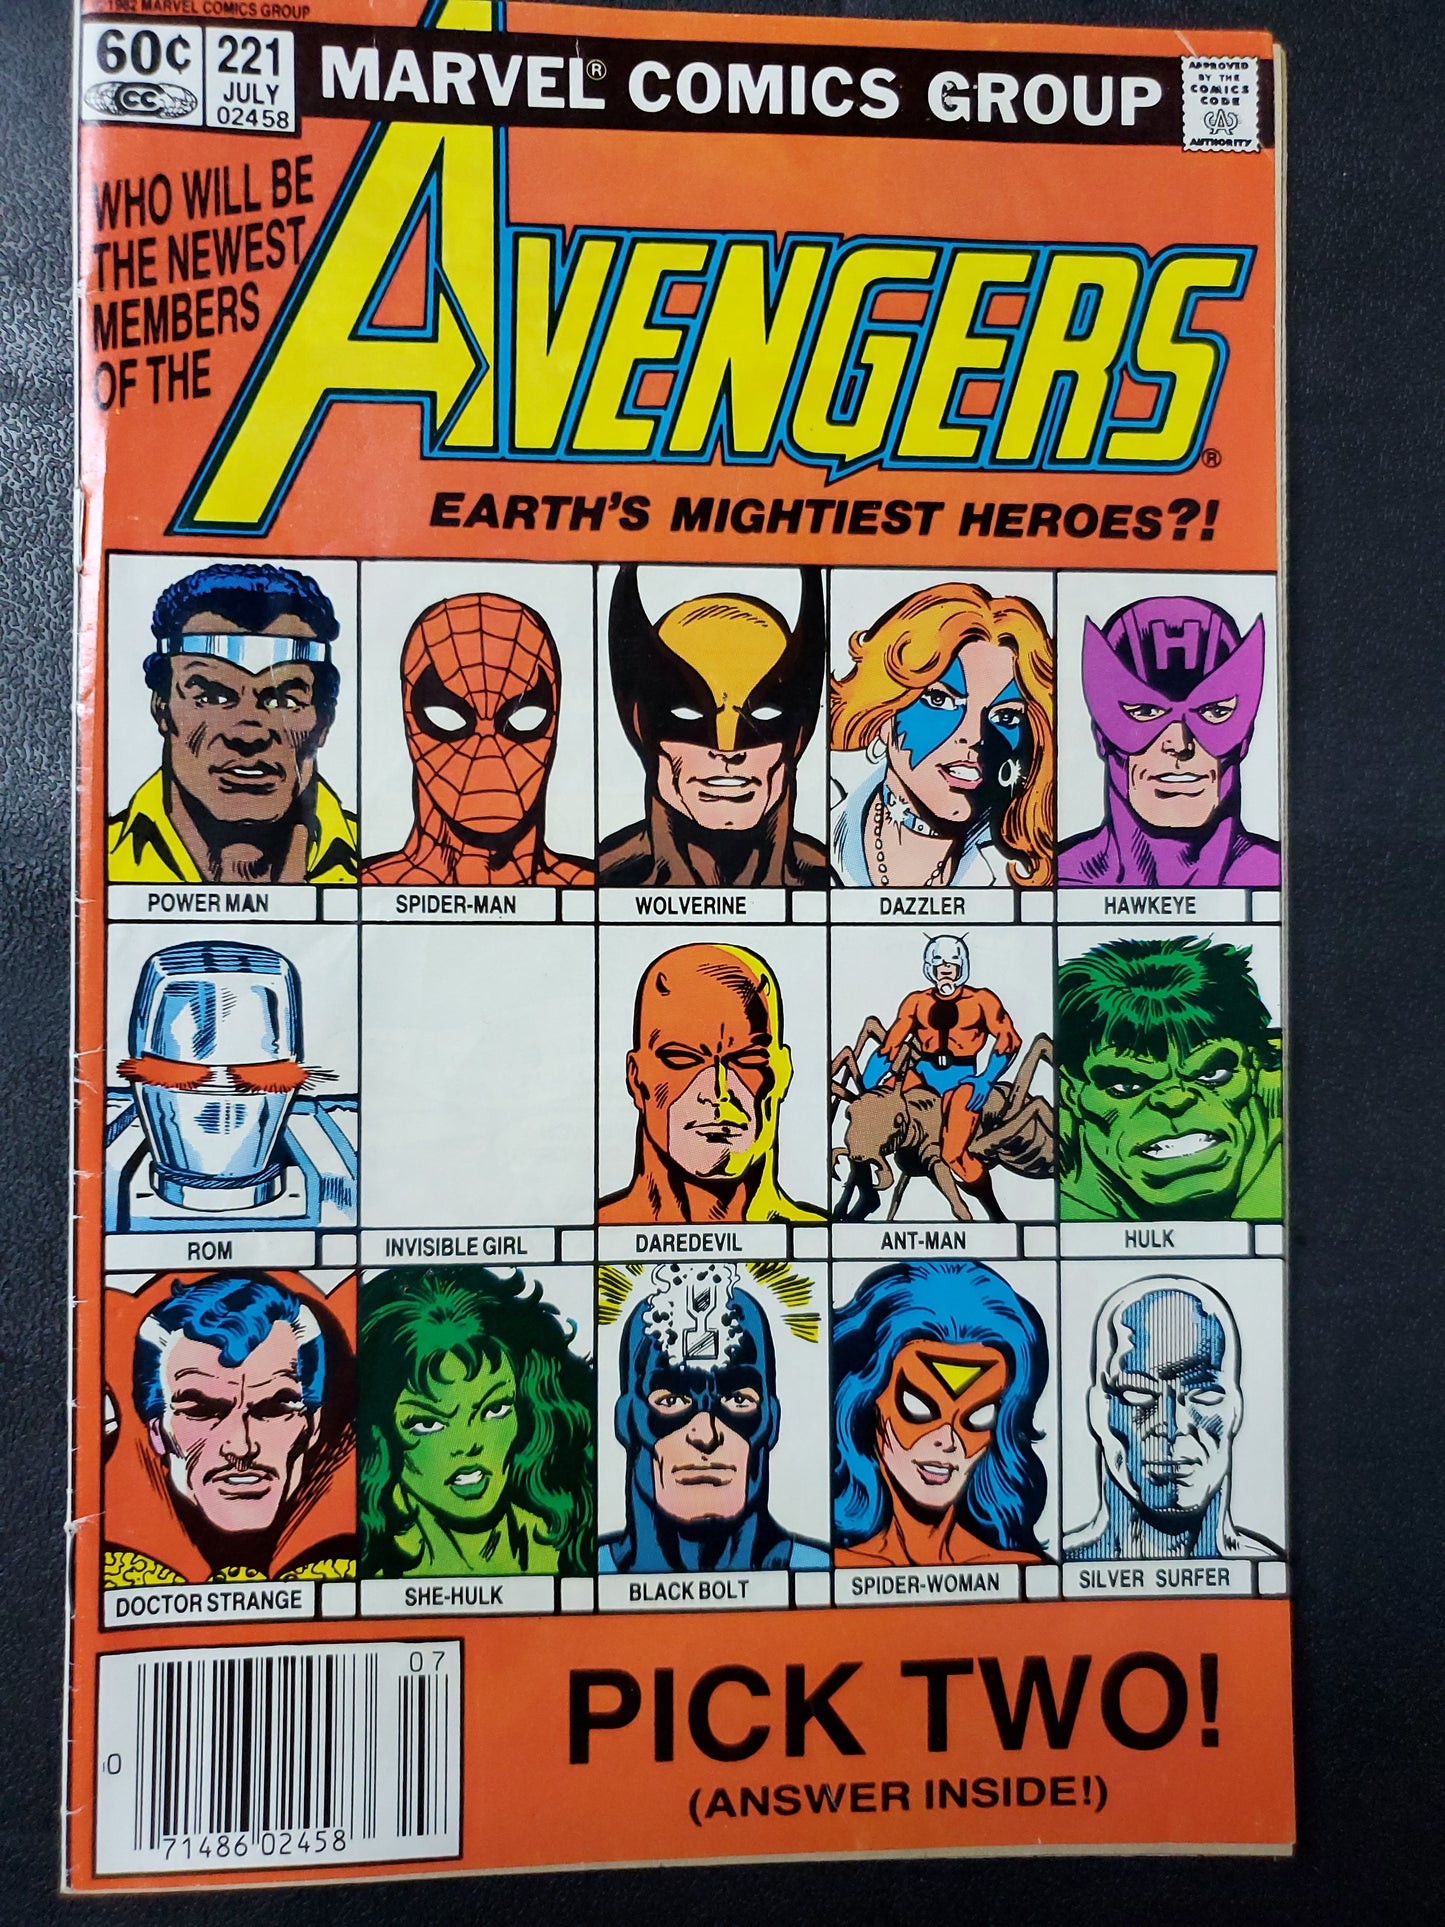 Avengers 221 Earth's Mightiest Heroes?!